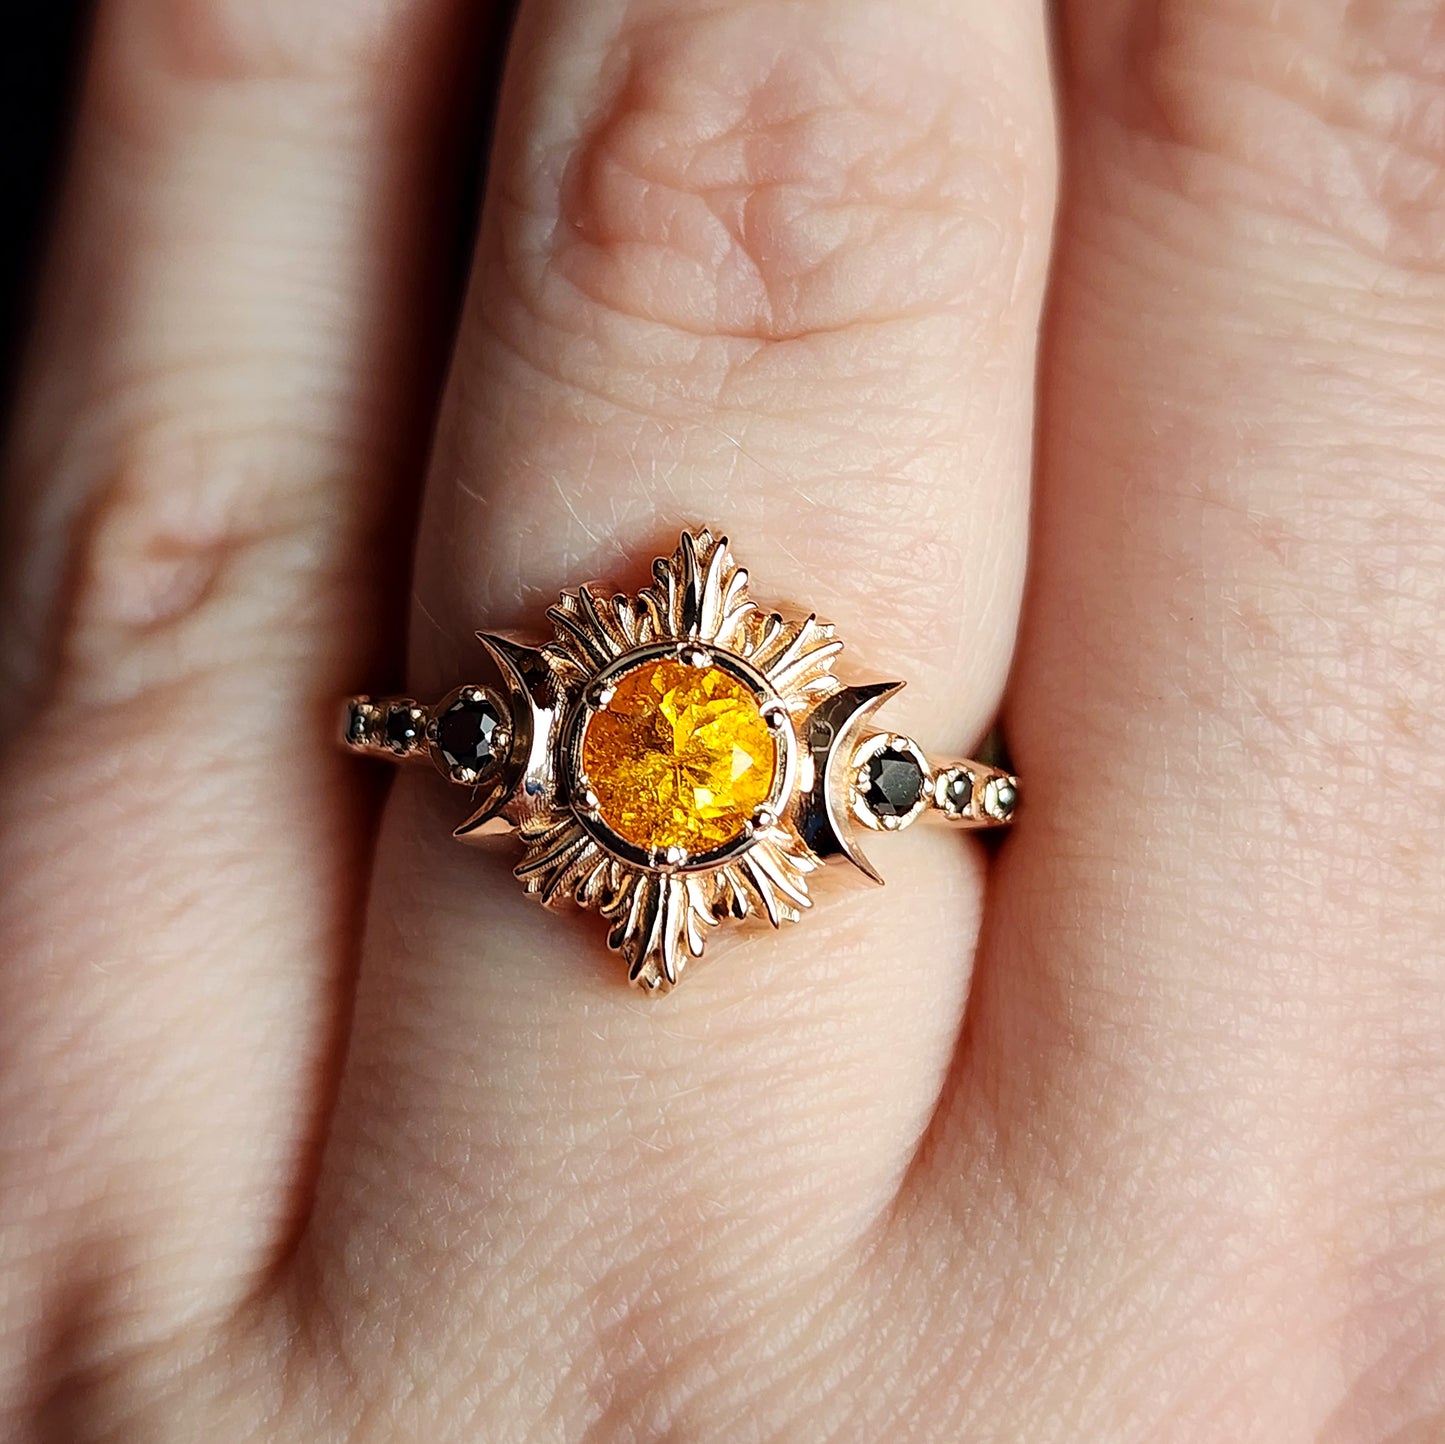 Spessartite Garnet Moon Fire Gothic Engagement Ring with Black Diamonds - 14k Yellow, Rose or Palladium White Gold